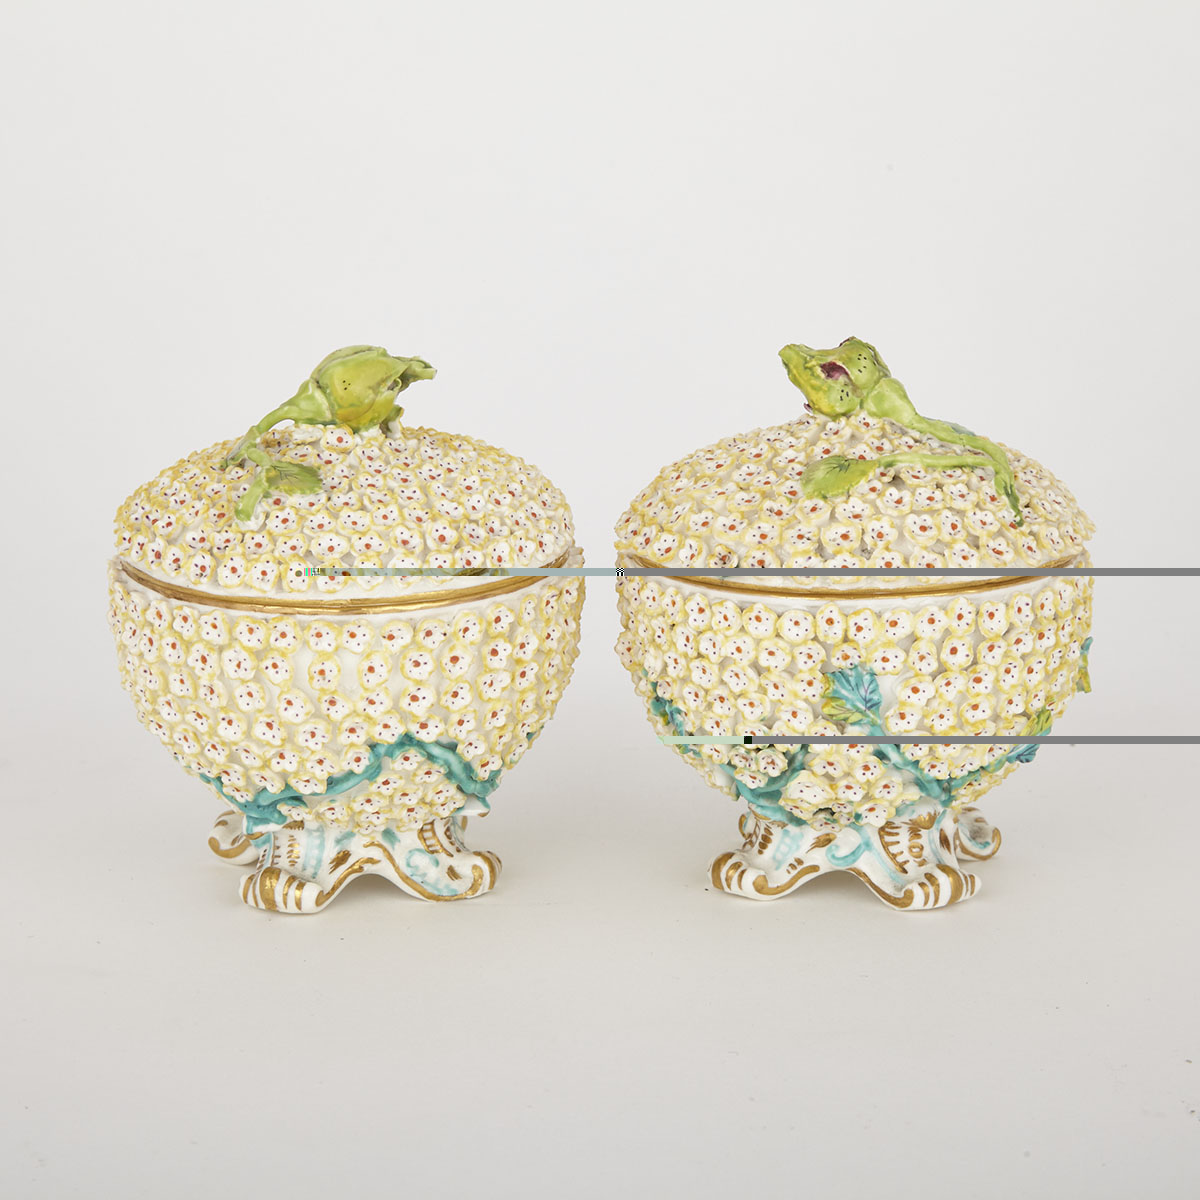 Pair of English Porcelain ‘Schneeballen’ Covered Jars, probably Coalport, c.1830